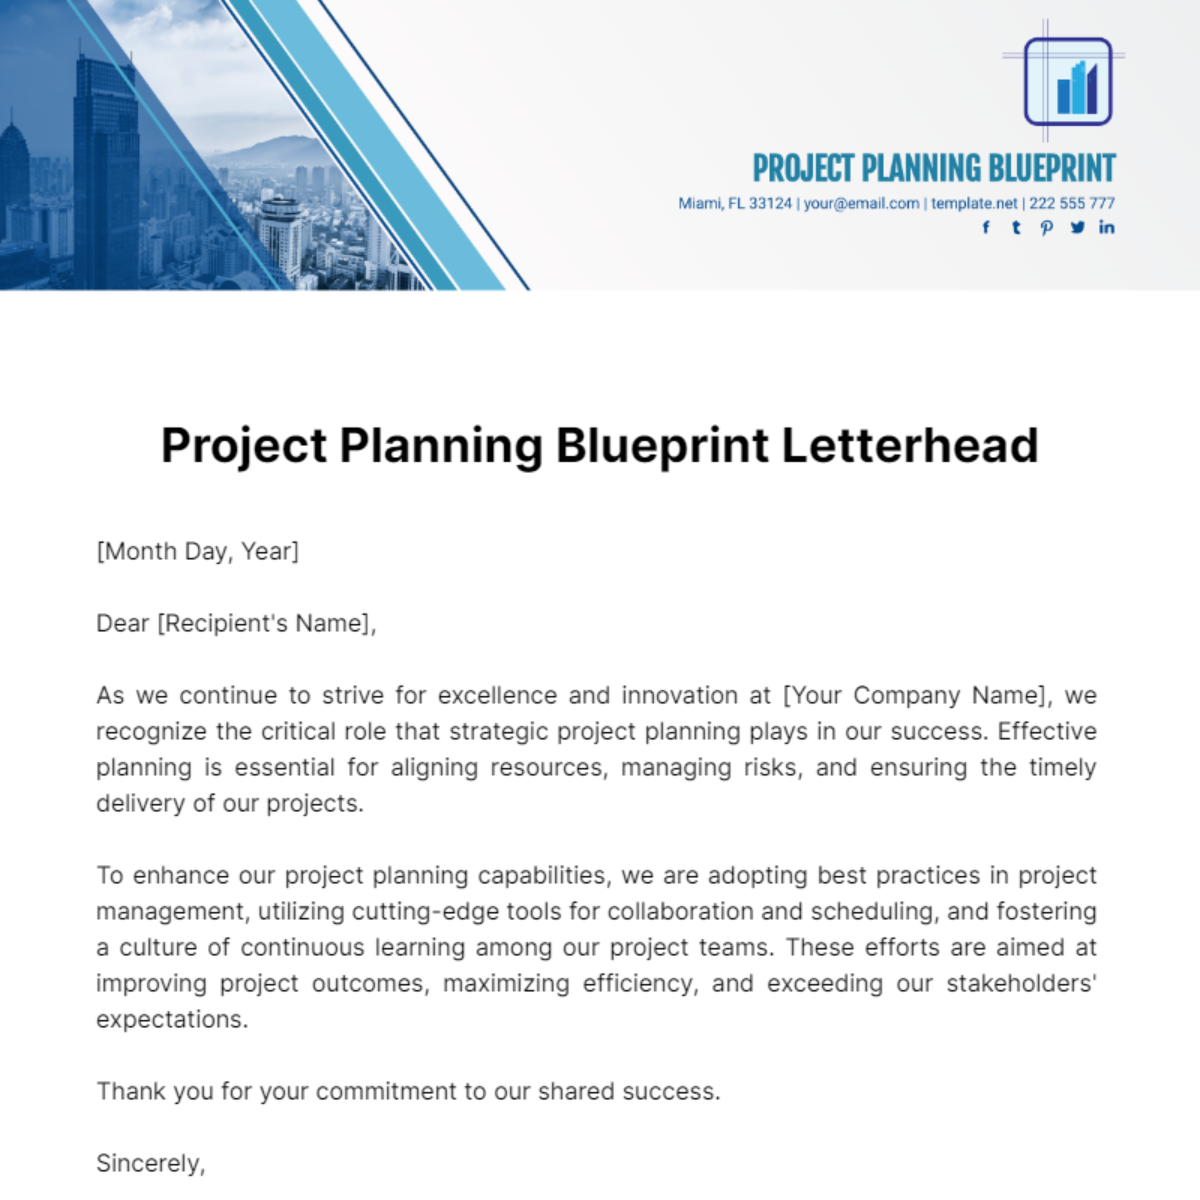 Project Planning Blueprint Letterhead Template